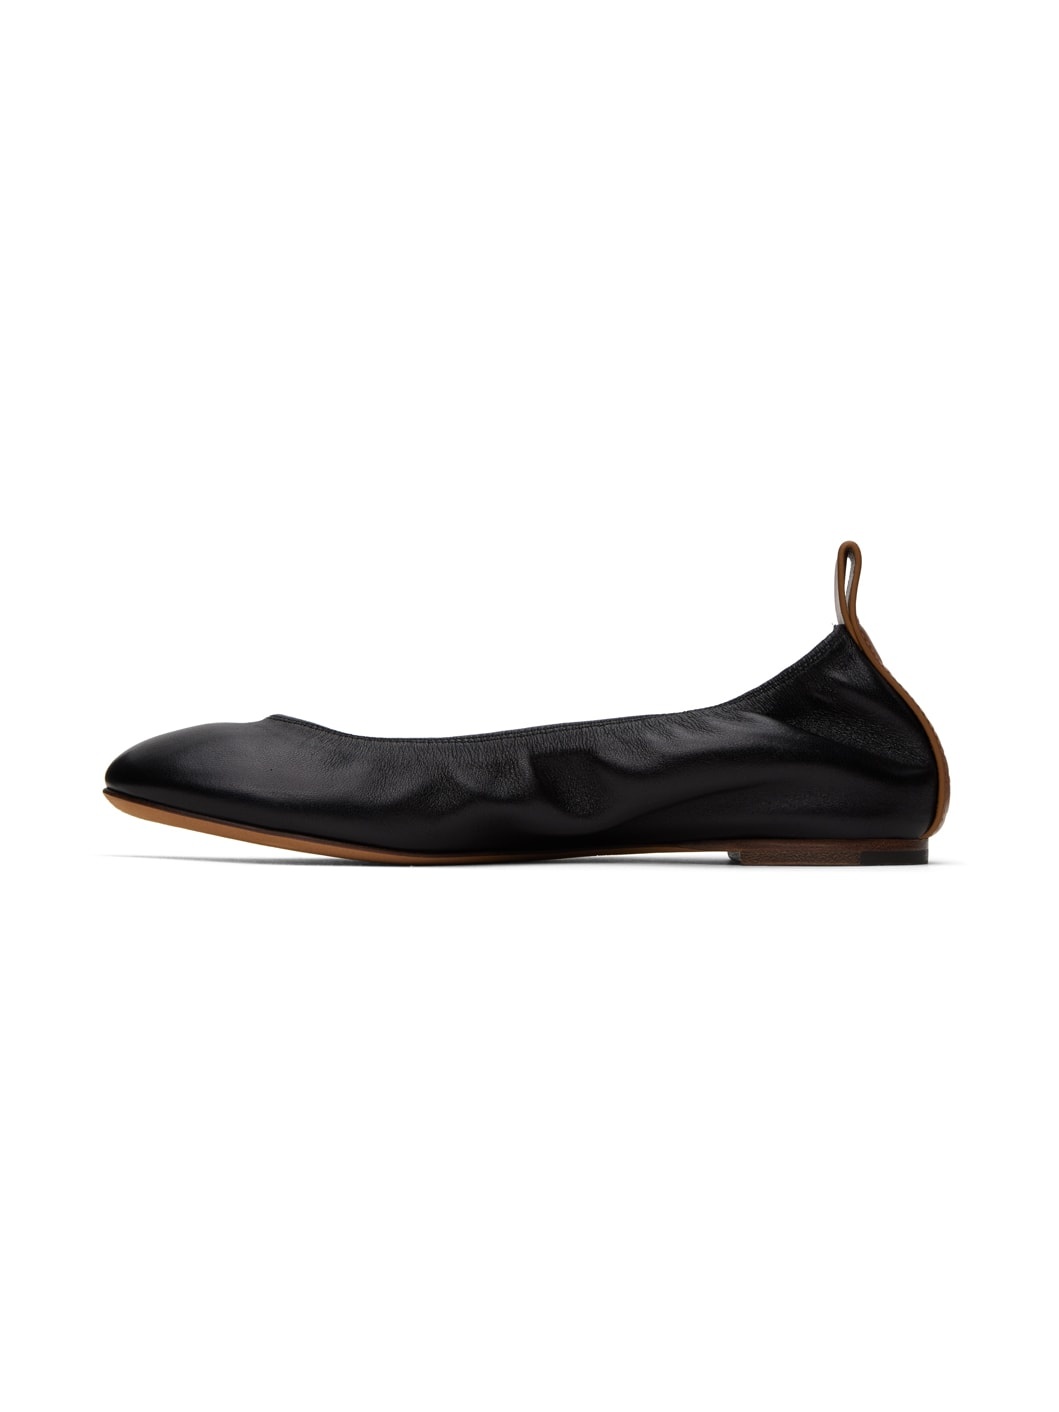 Black Leather Ballerina Flats - 3